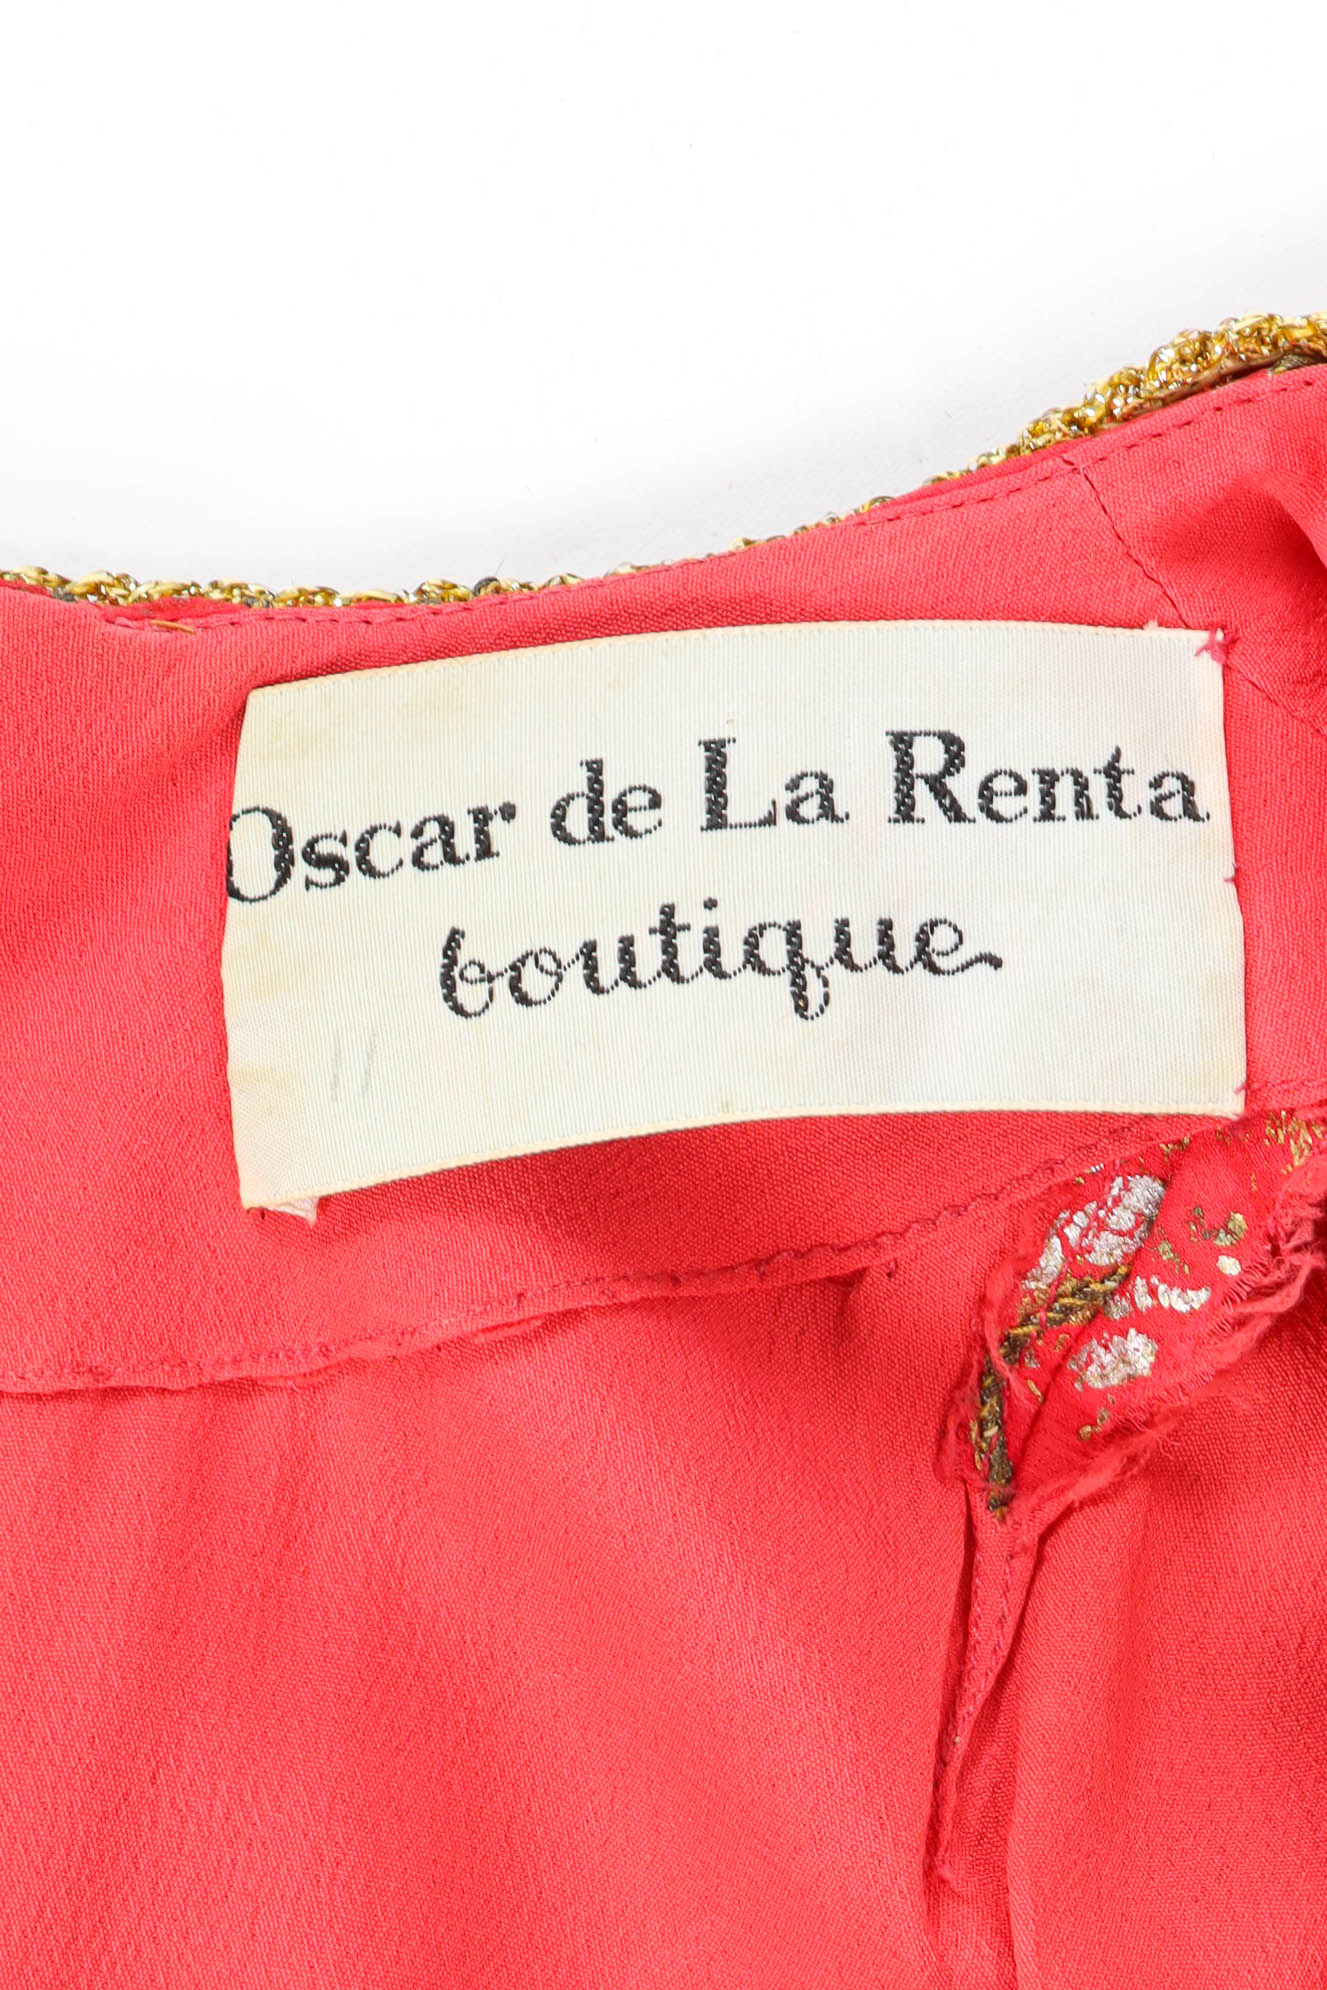 Vintage Oscar de la Renta Cosmic Floral Print Dress tag @ Recess LA